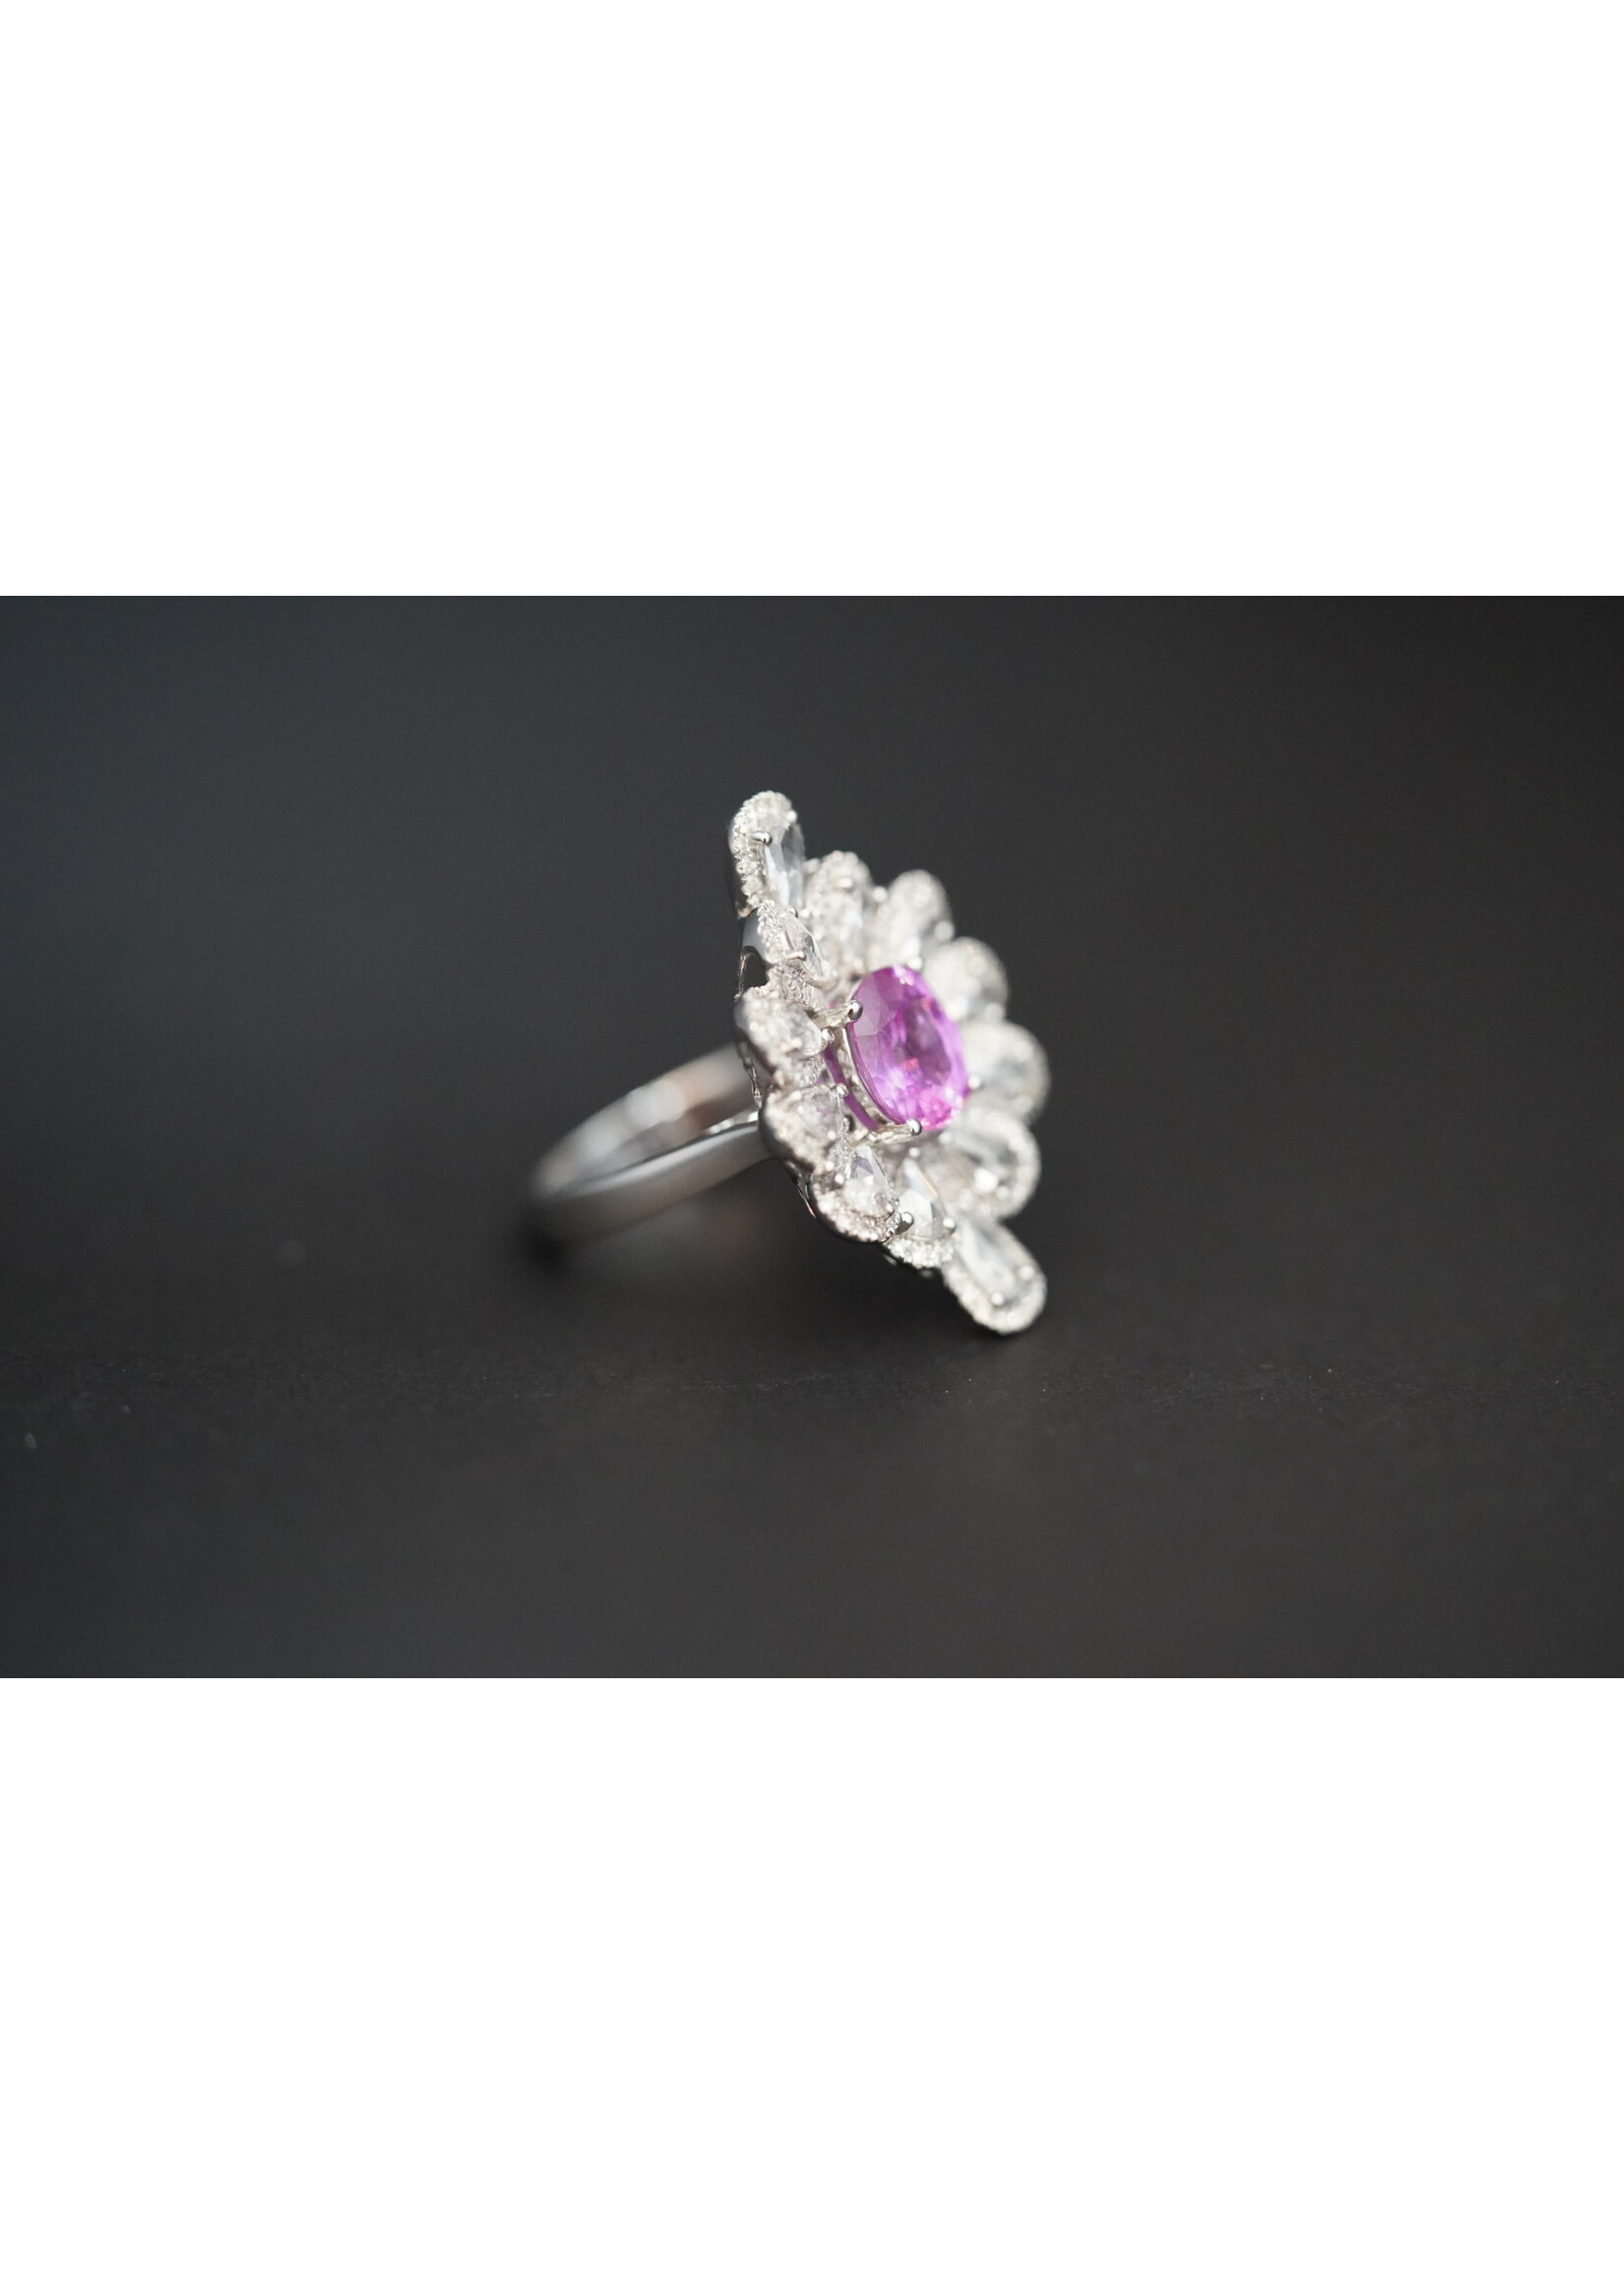 14KW 8.08g 4.14ctw (2.35ctr) Pink Sapphire & Diamond Fashion Ring (size 7)